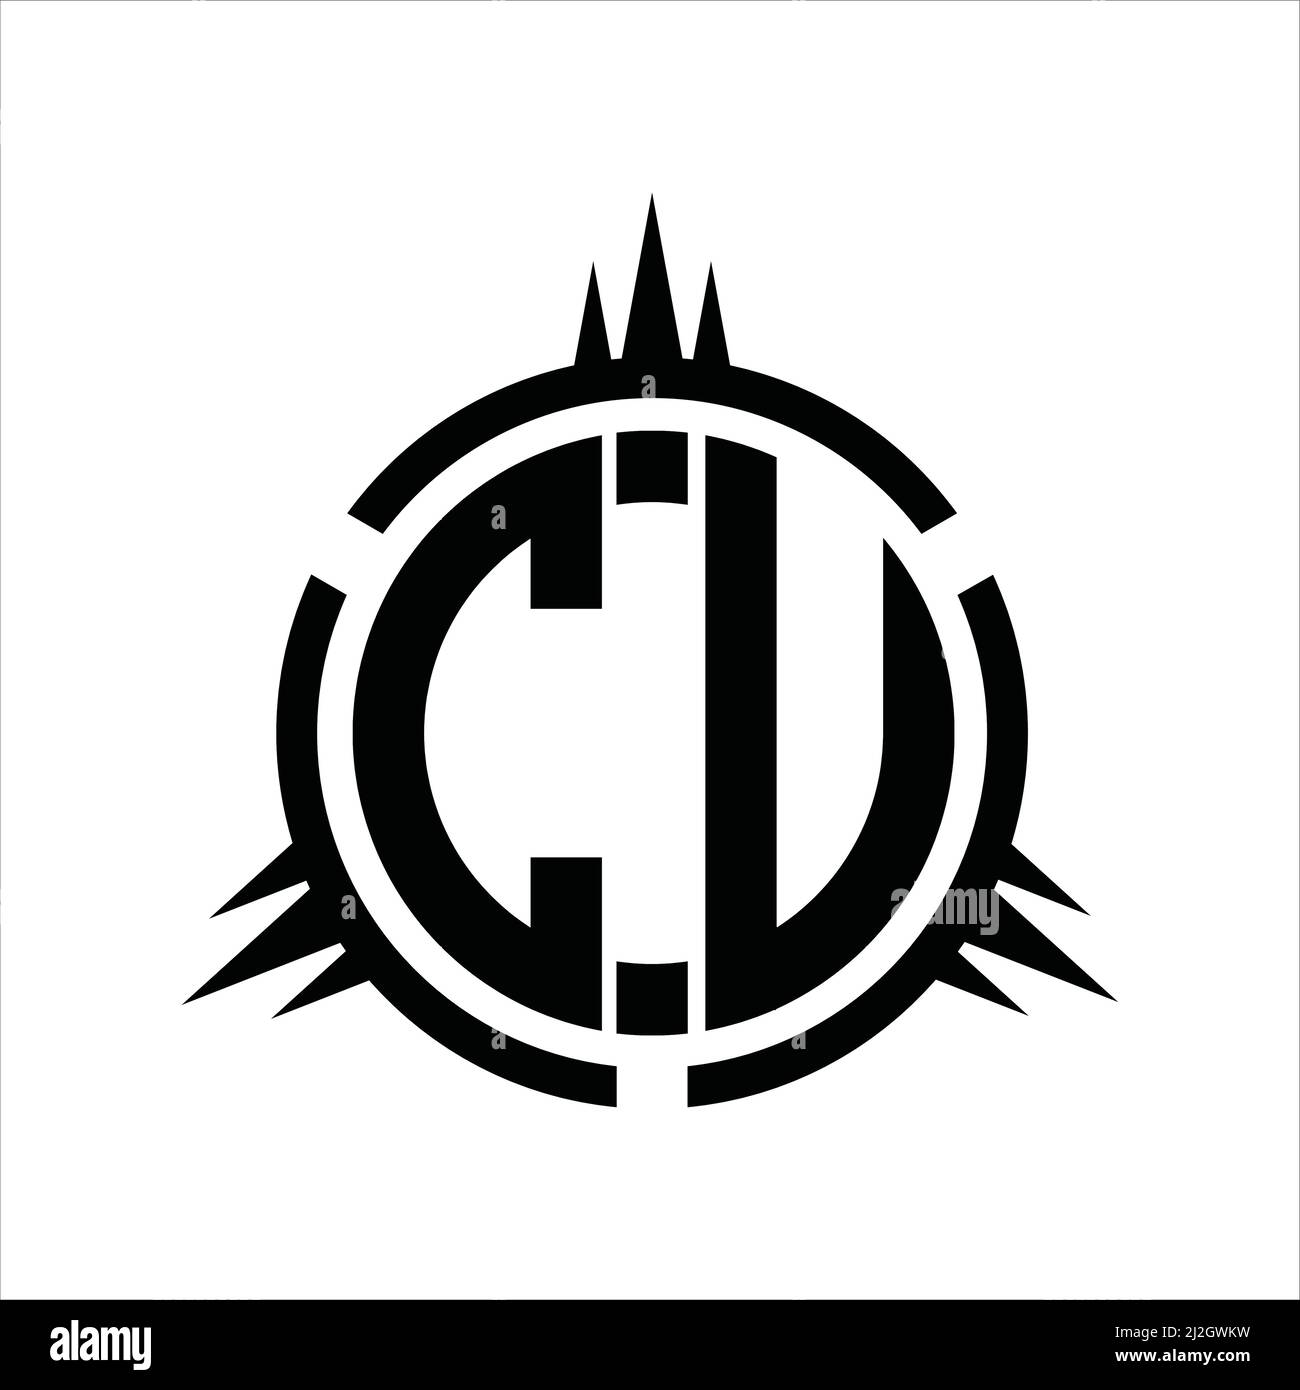 CU Logo monogram isolated on circle element design template Stock Vector